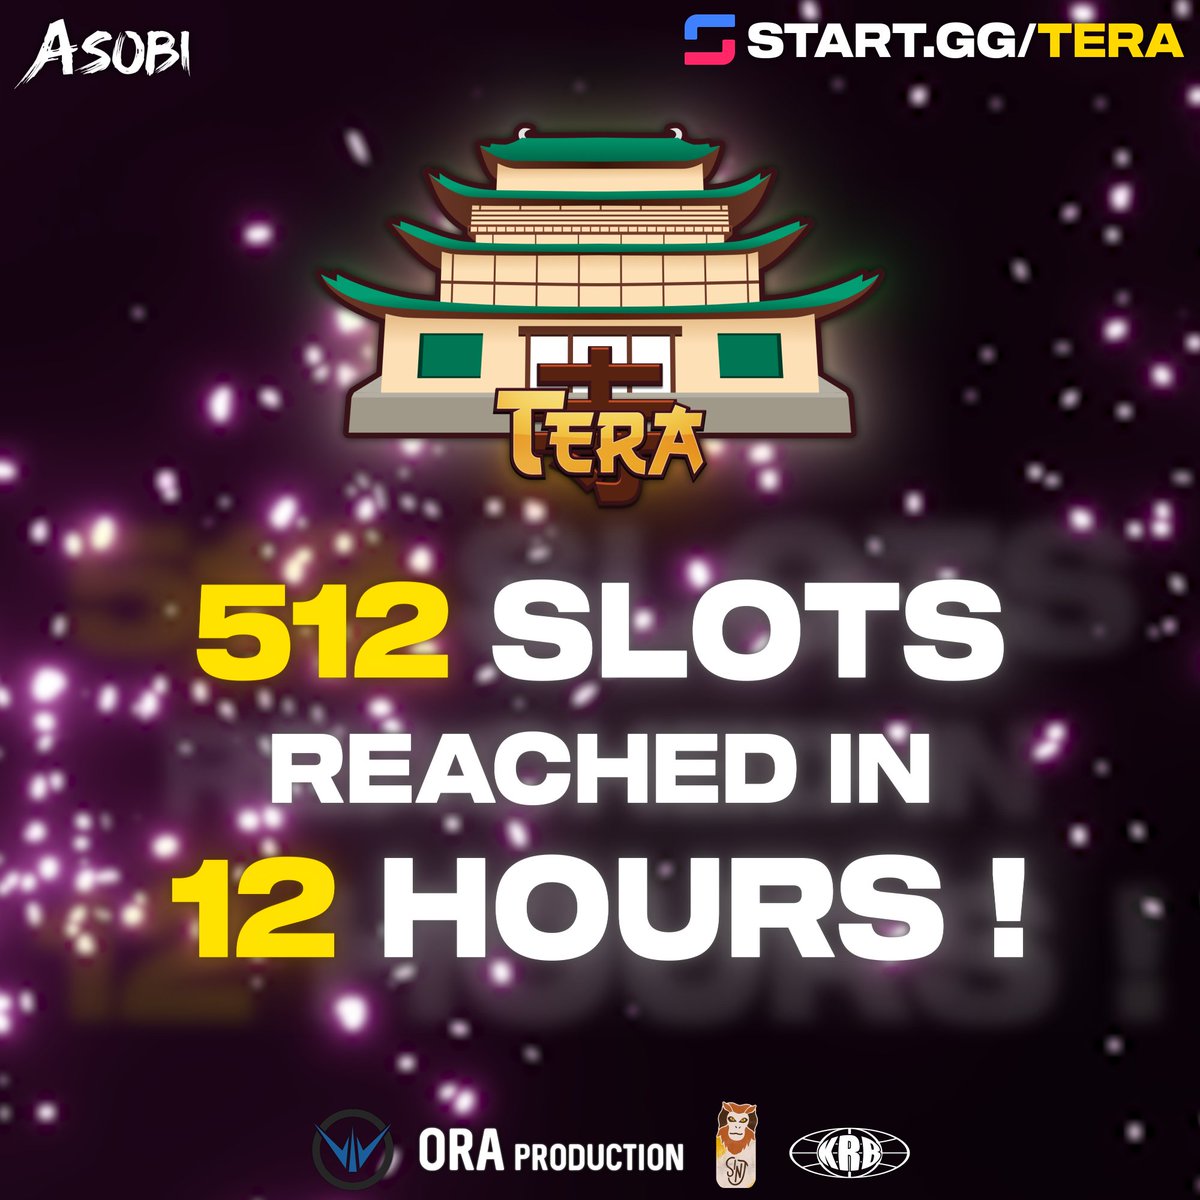 #Tera has reach 512 in 12 HOURS 🔥

REGISTER NOW ! 👇🏻

start.gg/tera